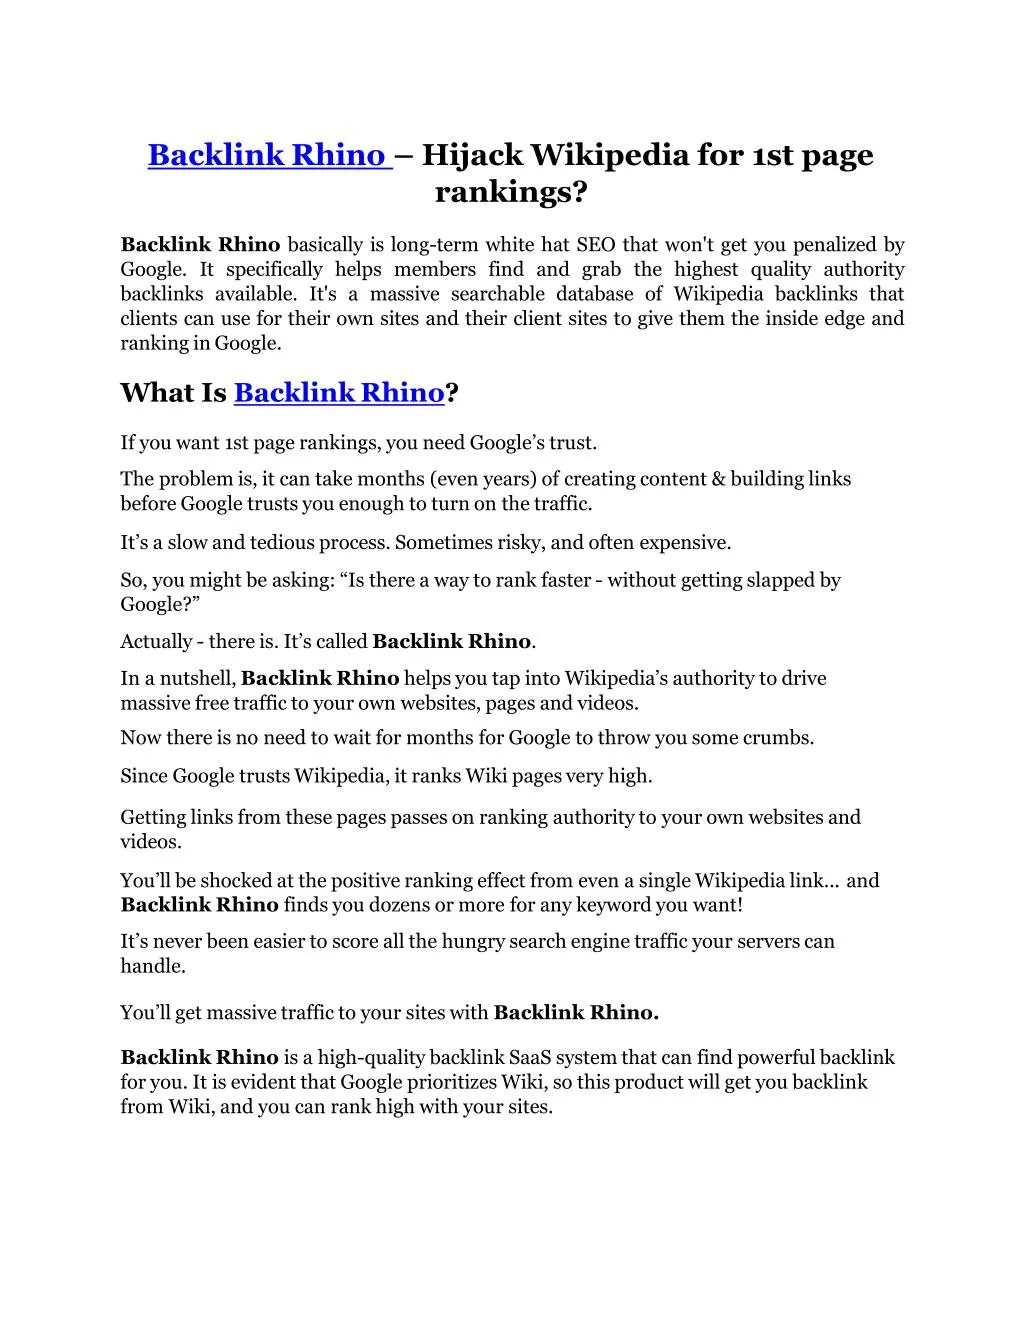 backlink rhino hijack wikipedia for 1st page n.